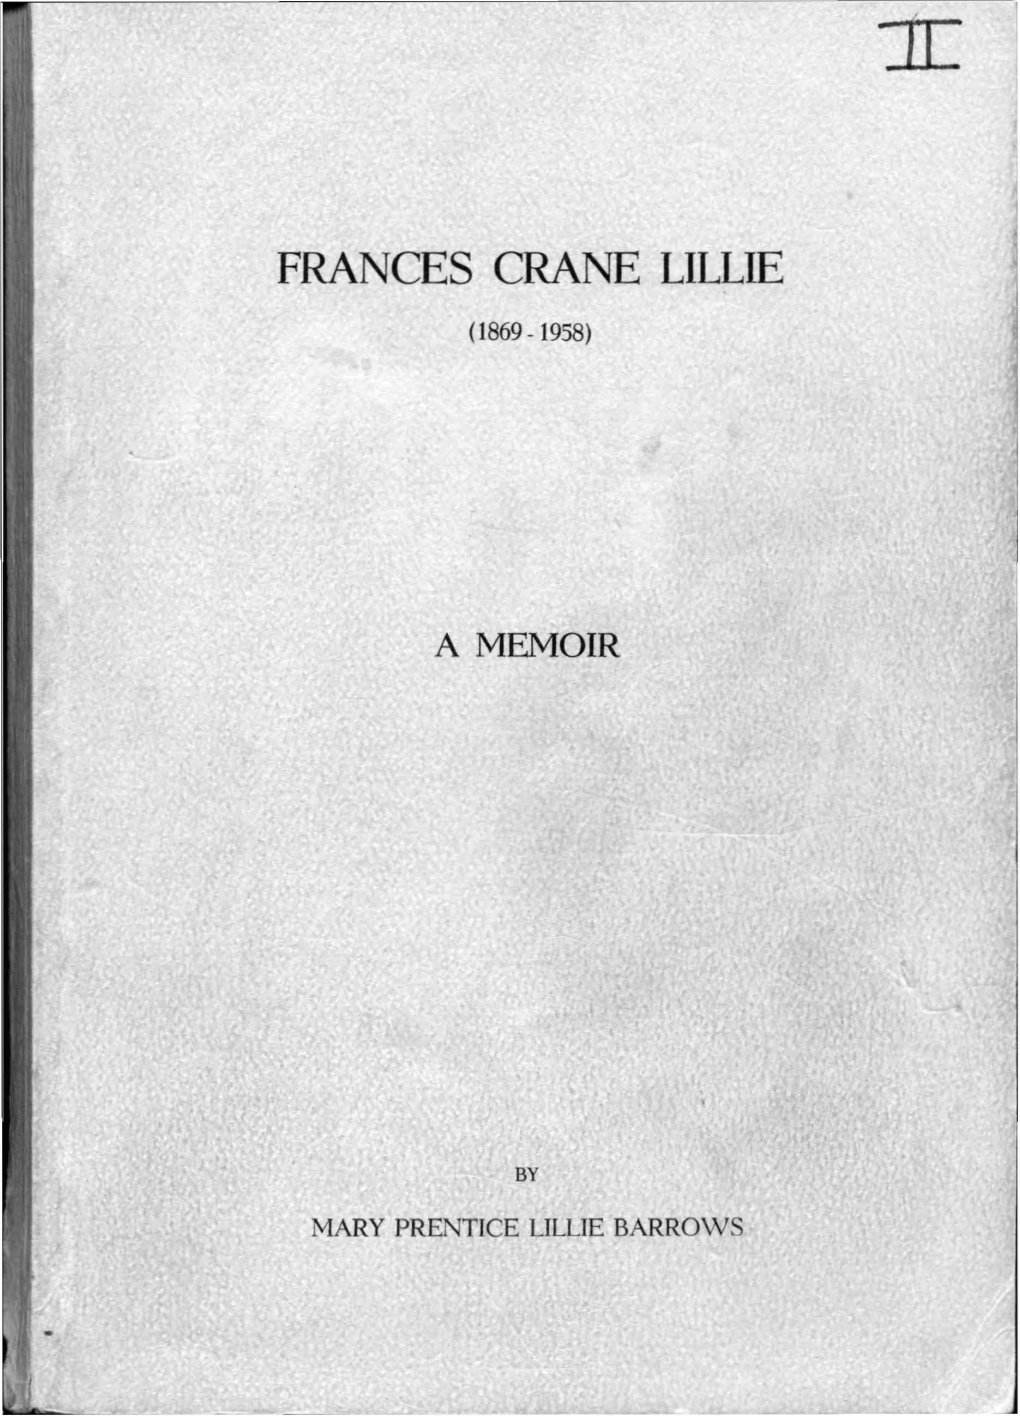 Frances Crane Lillie